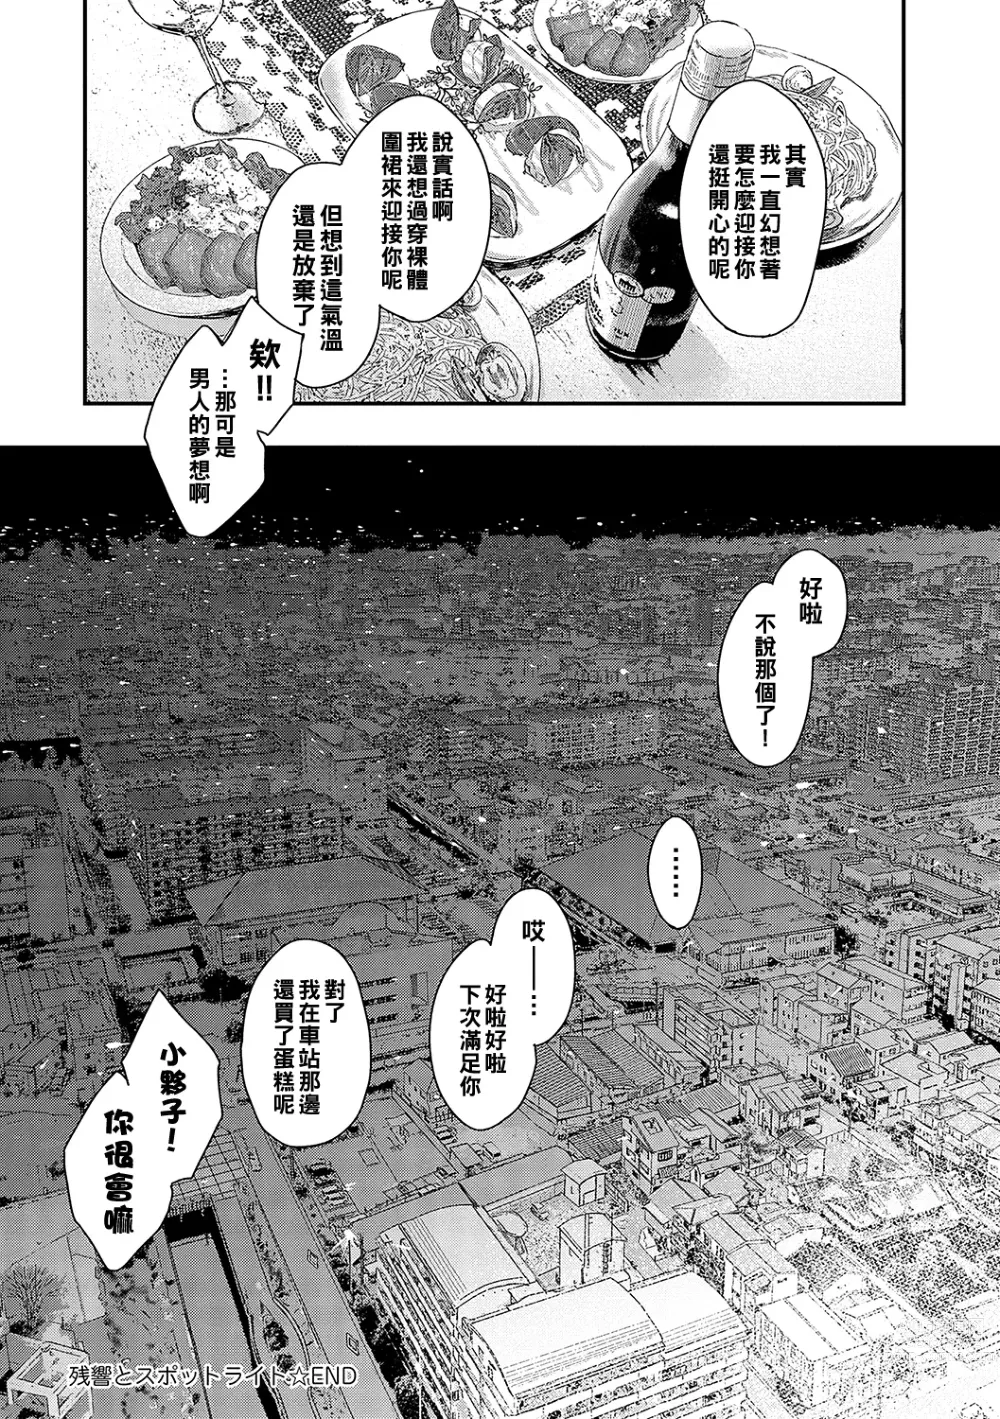 Page 34 of manga Zankyou  to Spotlight - Reverberation and spotlight